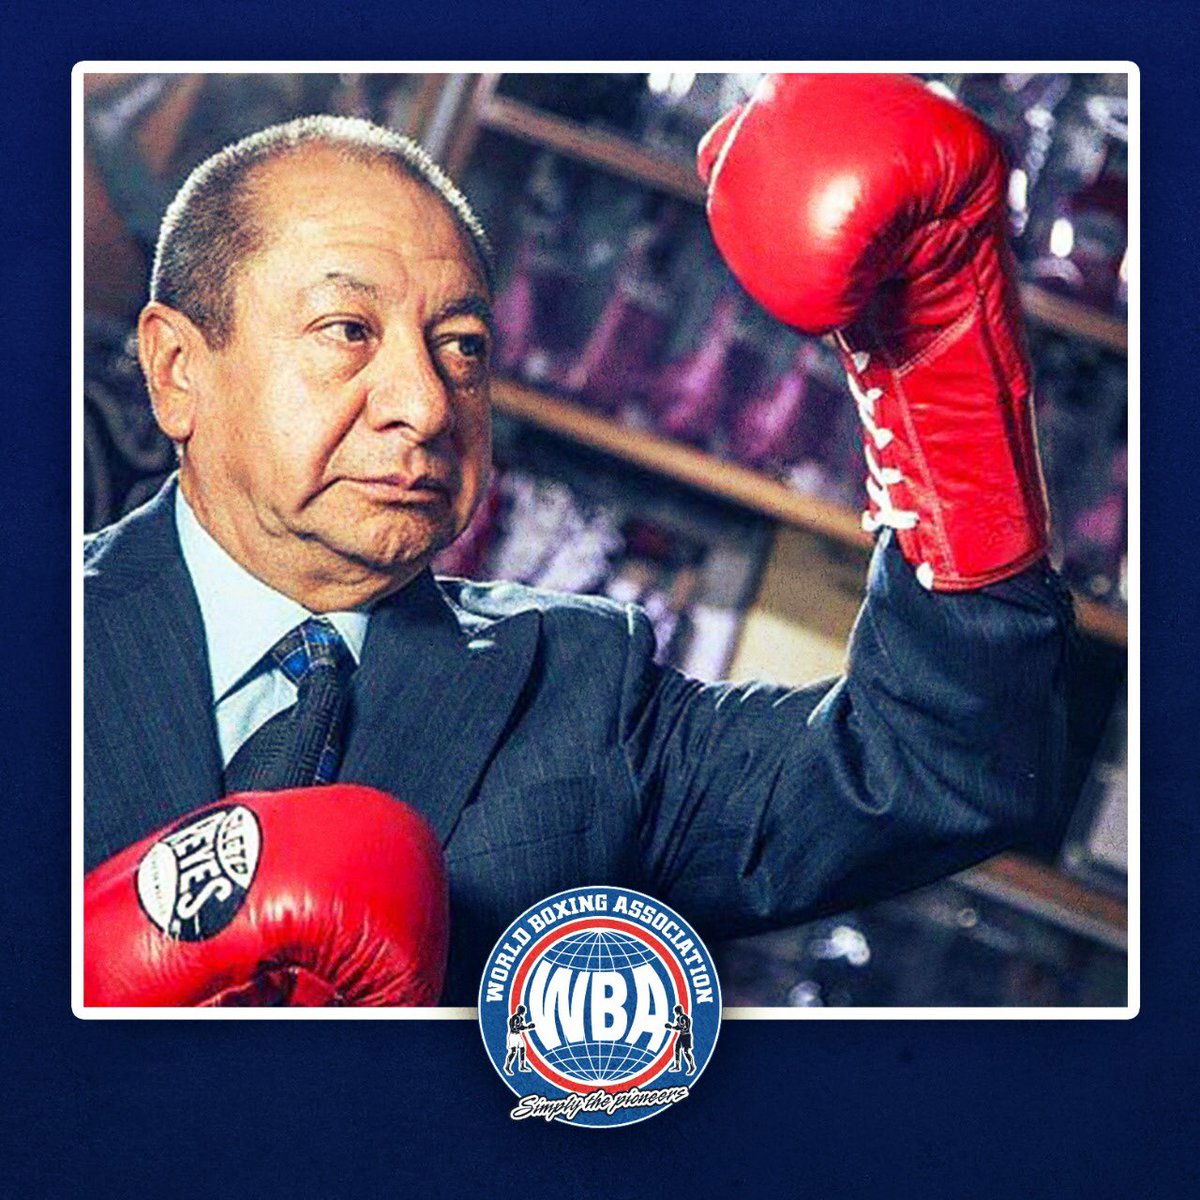 Alberto Reyes of Cleto Reyes gloves passes away – World Boxing Association